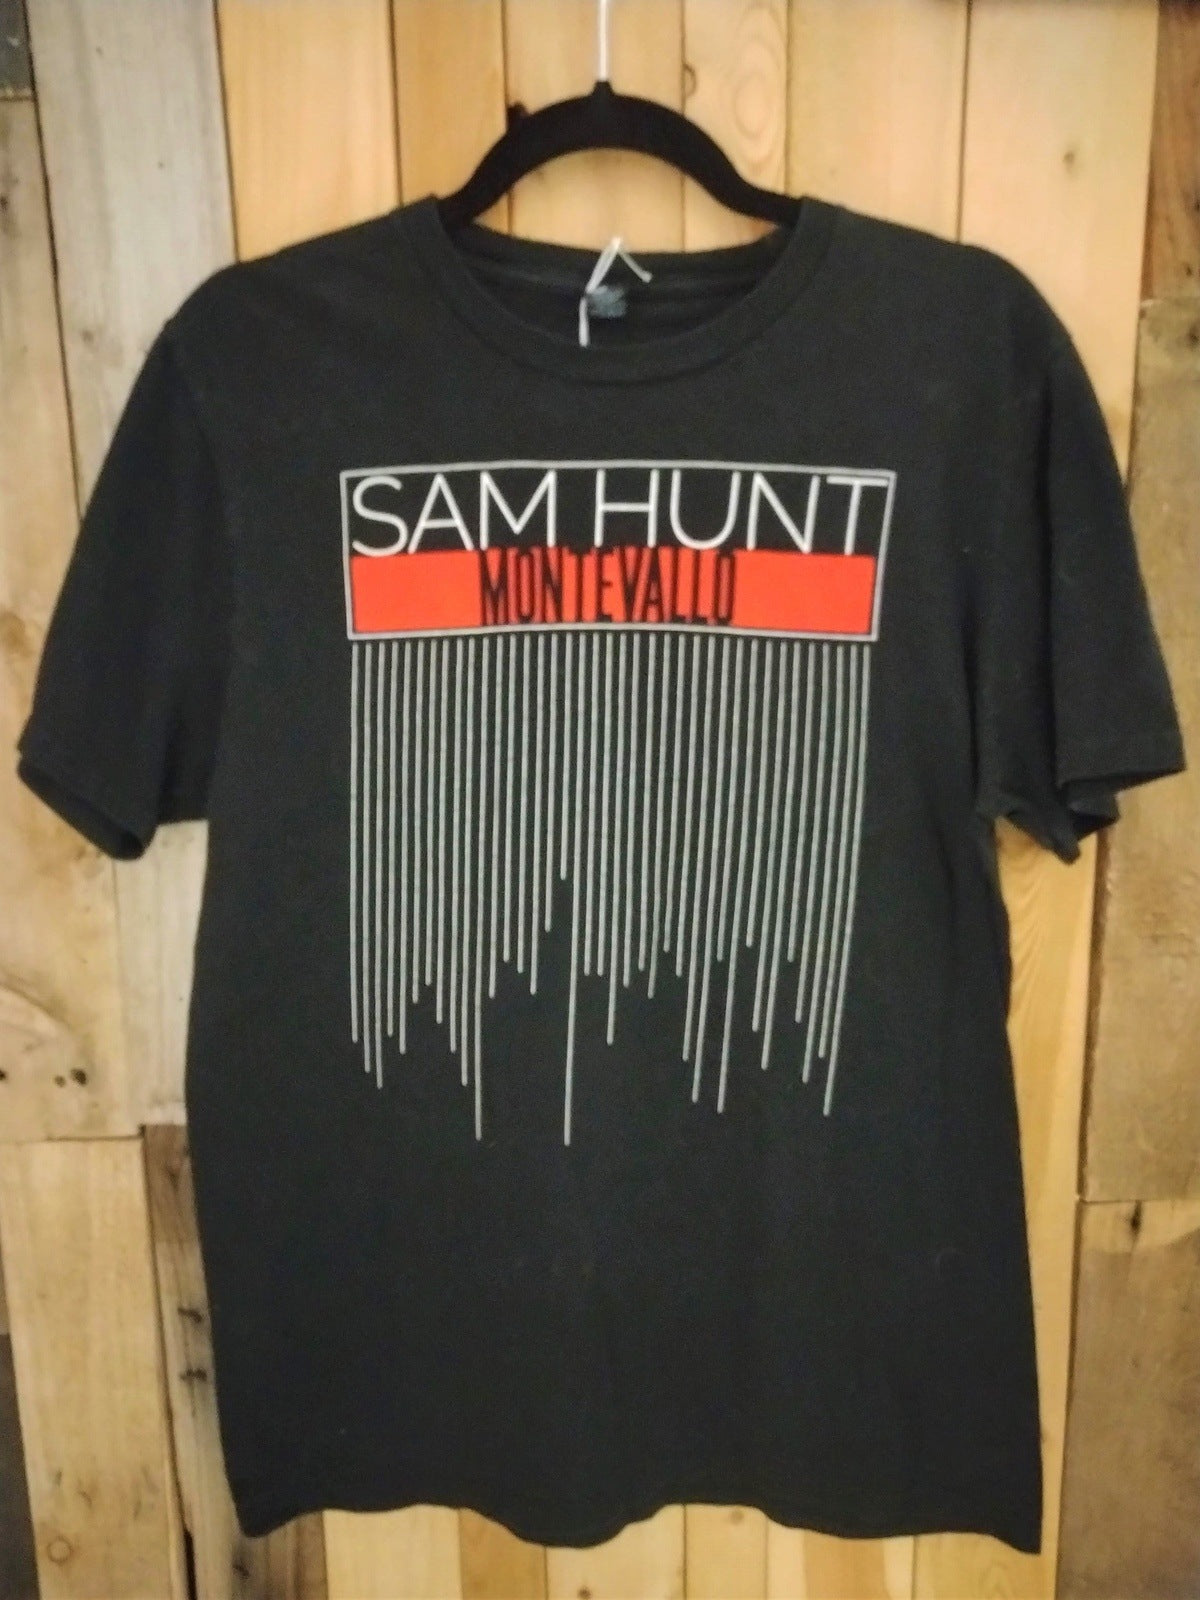 Sam Hunt "Montevallo" T Shirt Size Medium 695147